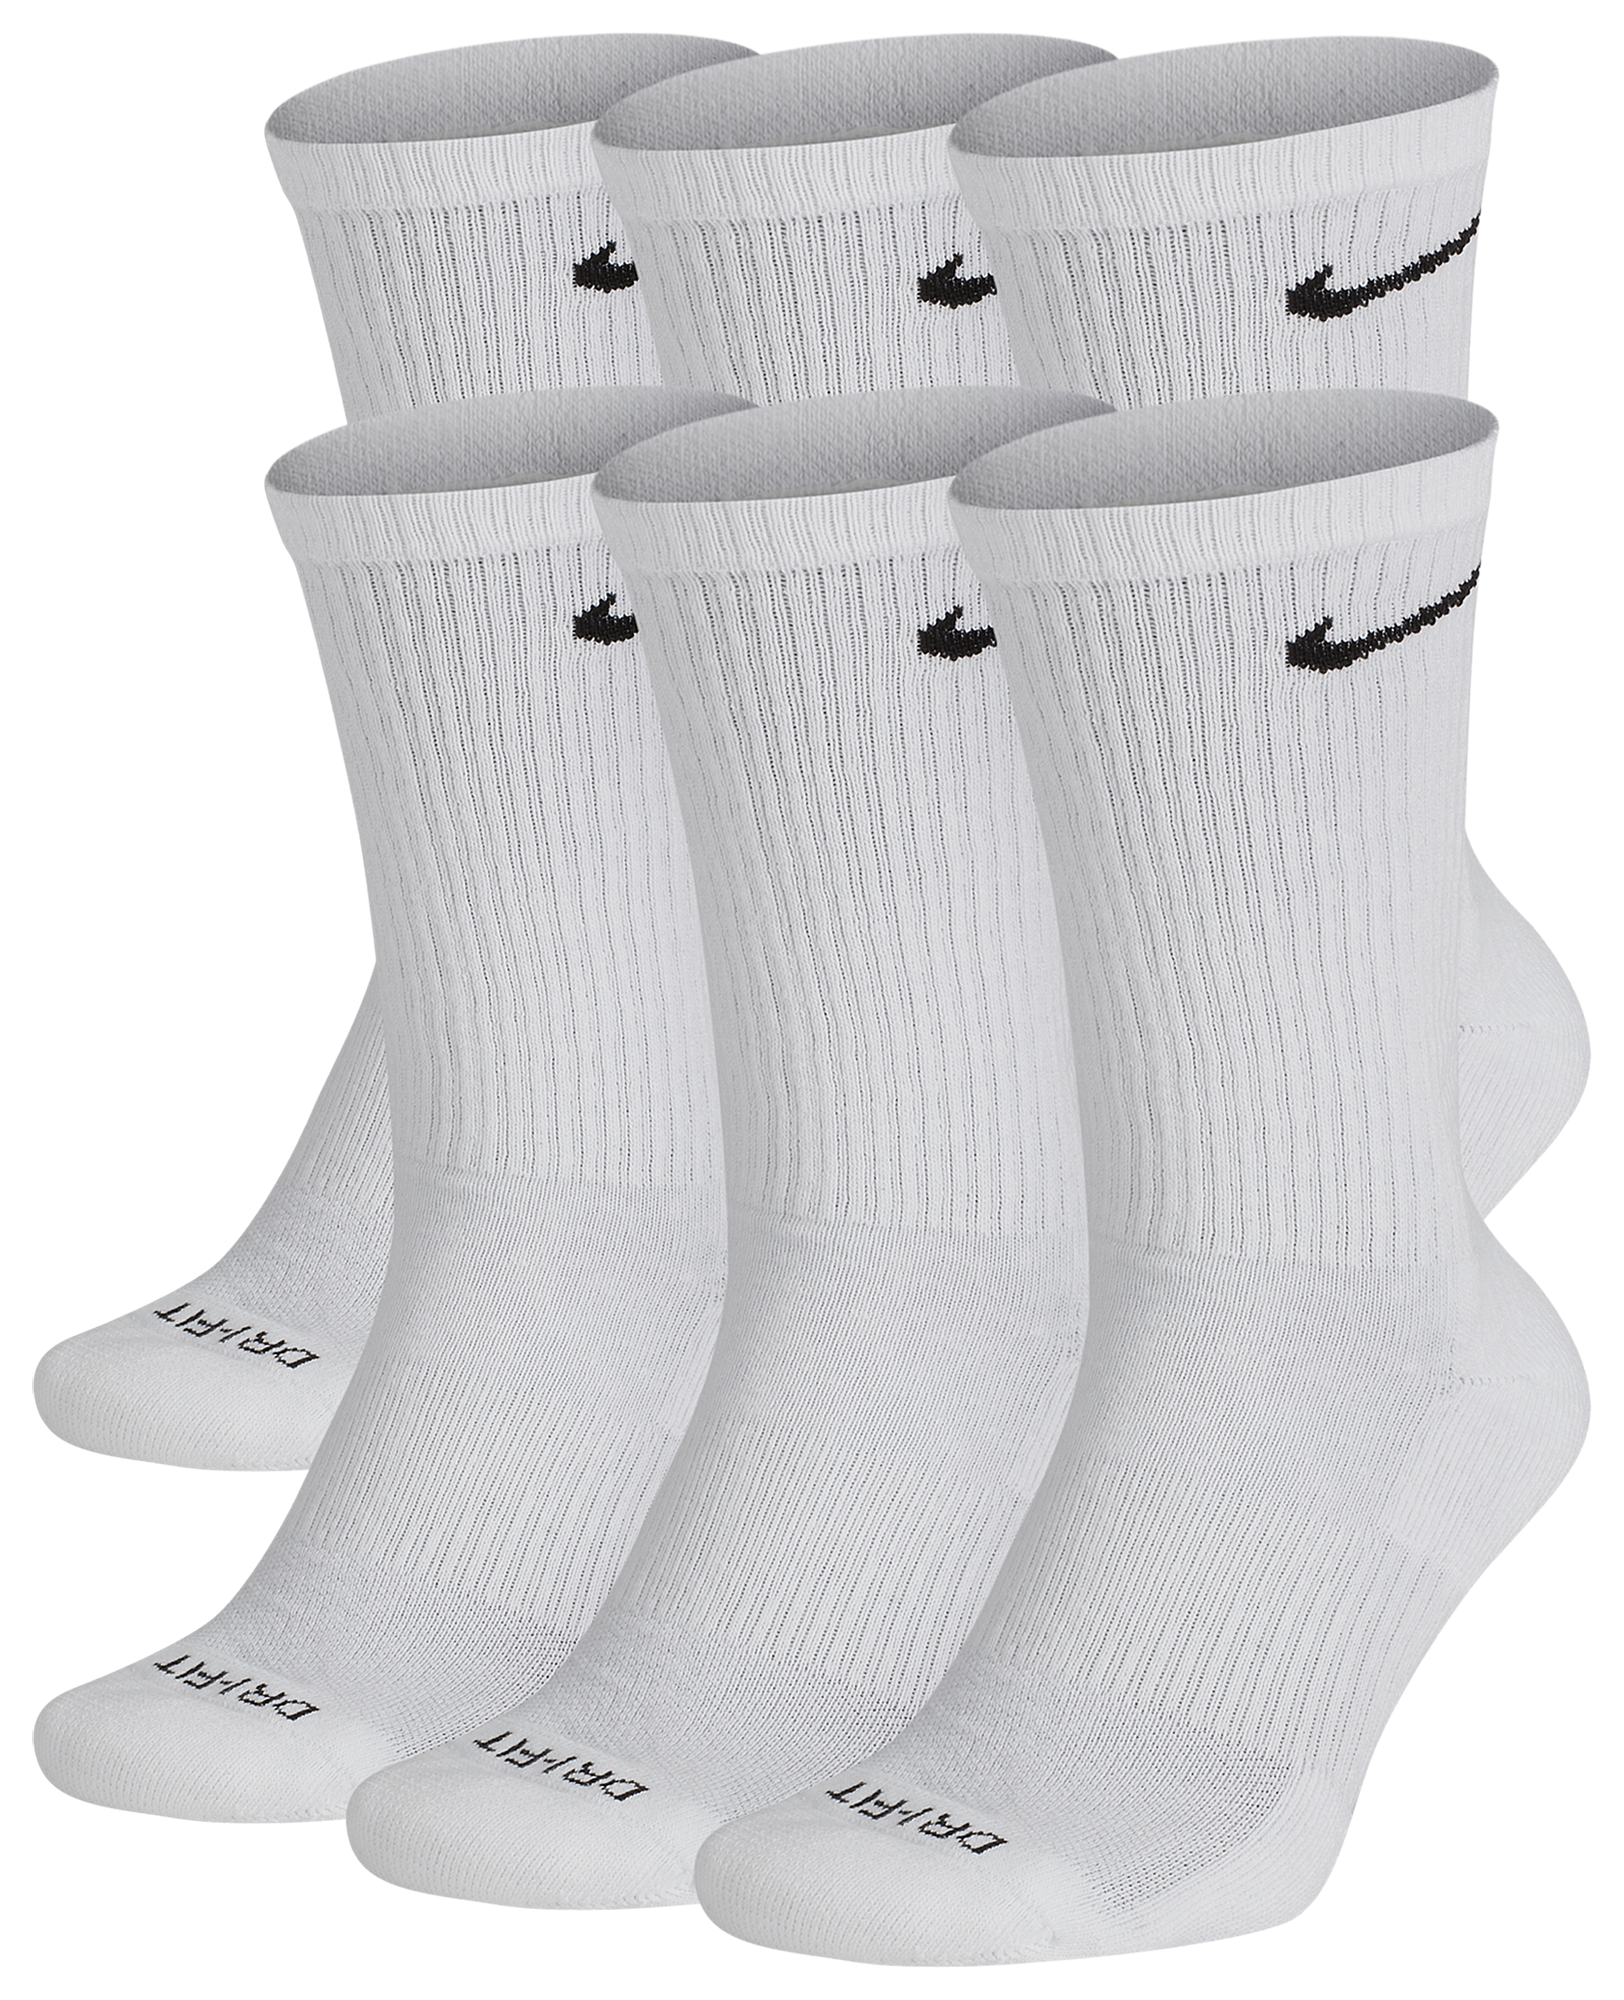 Optimista Decimal Extremadamente importante Nike 6 Pack Everyday Plus Cushioned Socks | Foot Locker